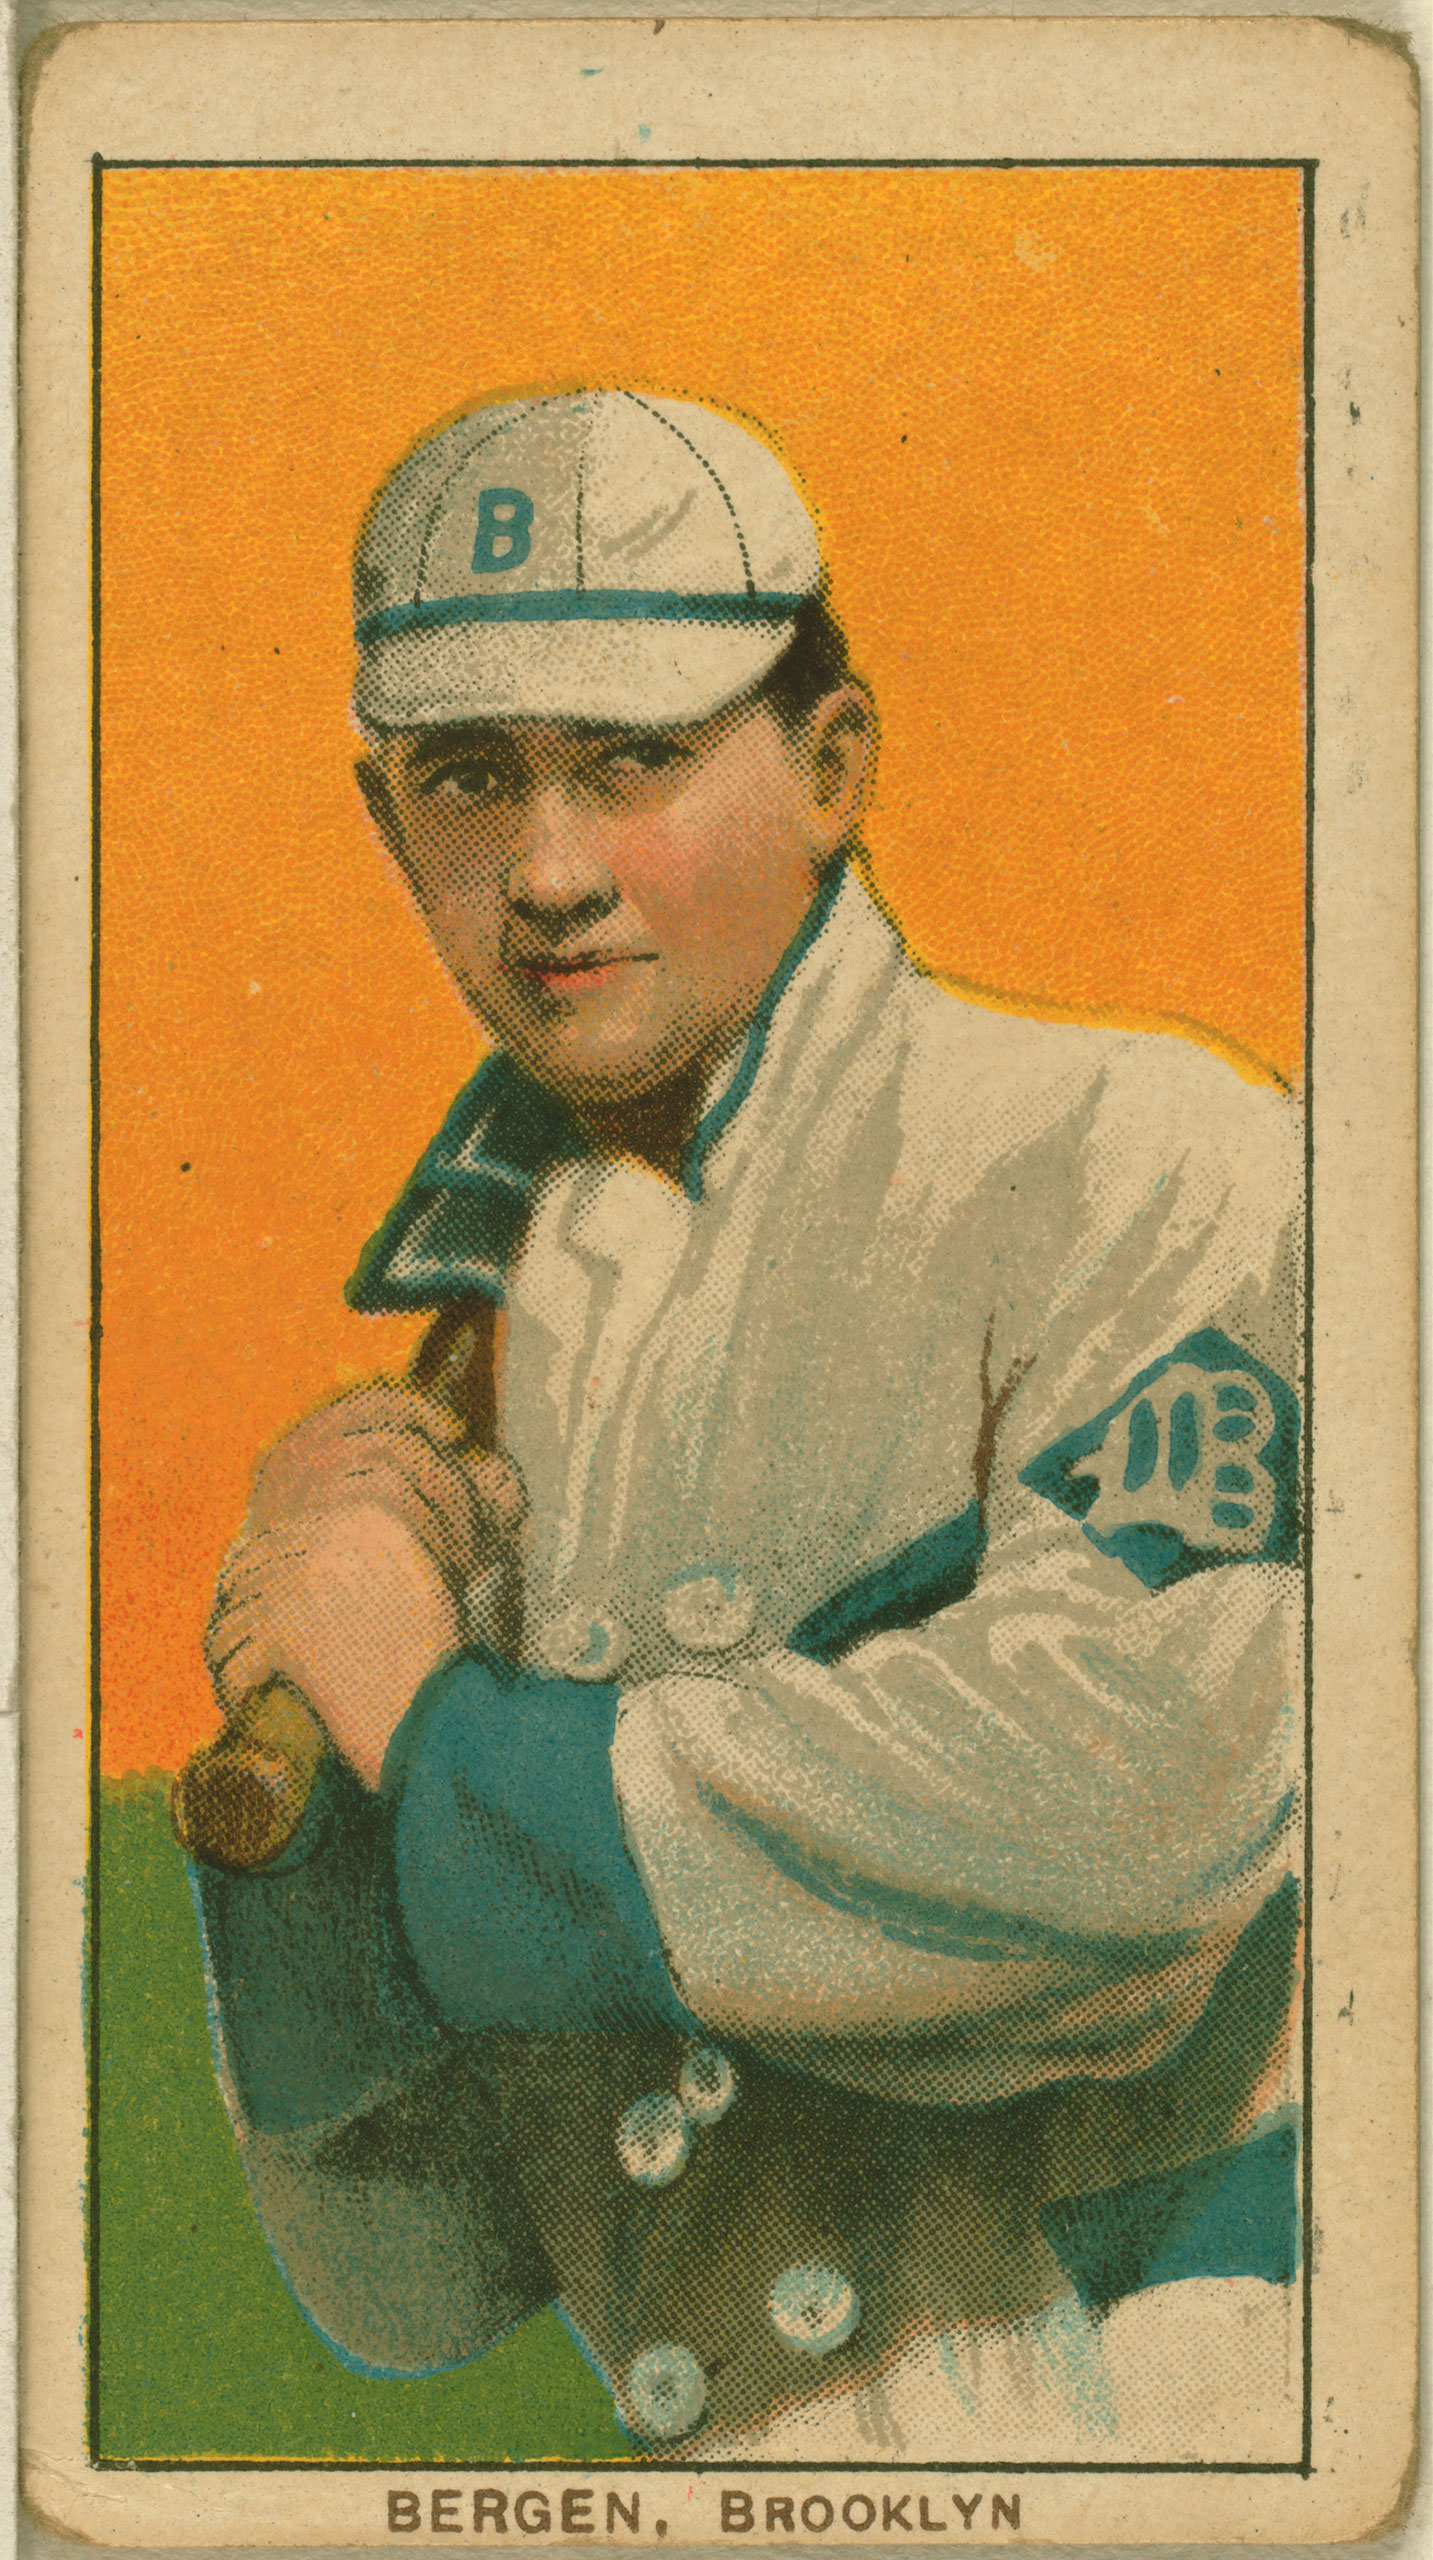 Bill Bergen, Brooklyn Dodgers, baseball card, 1909-1911.